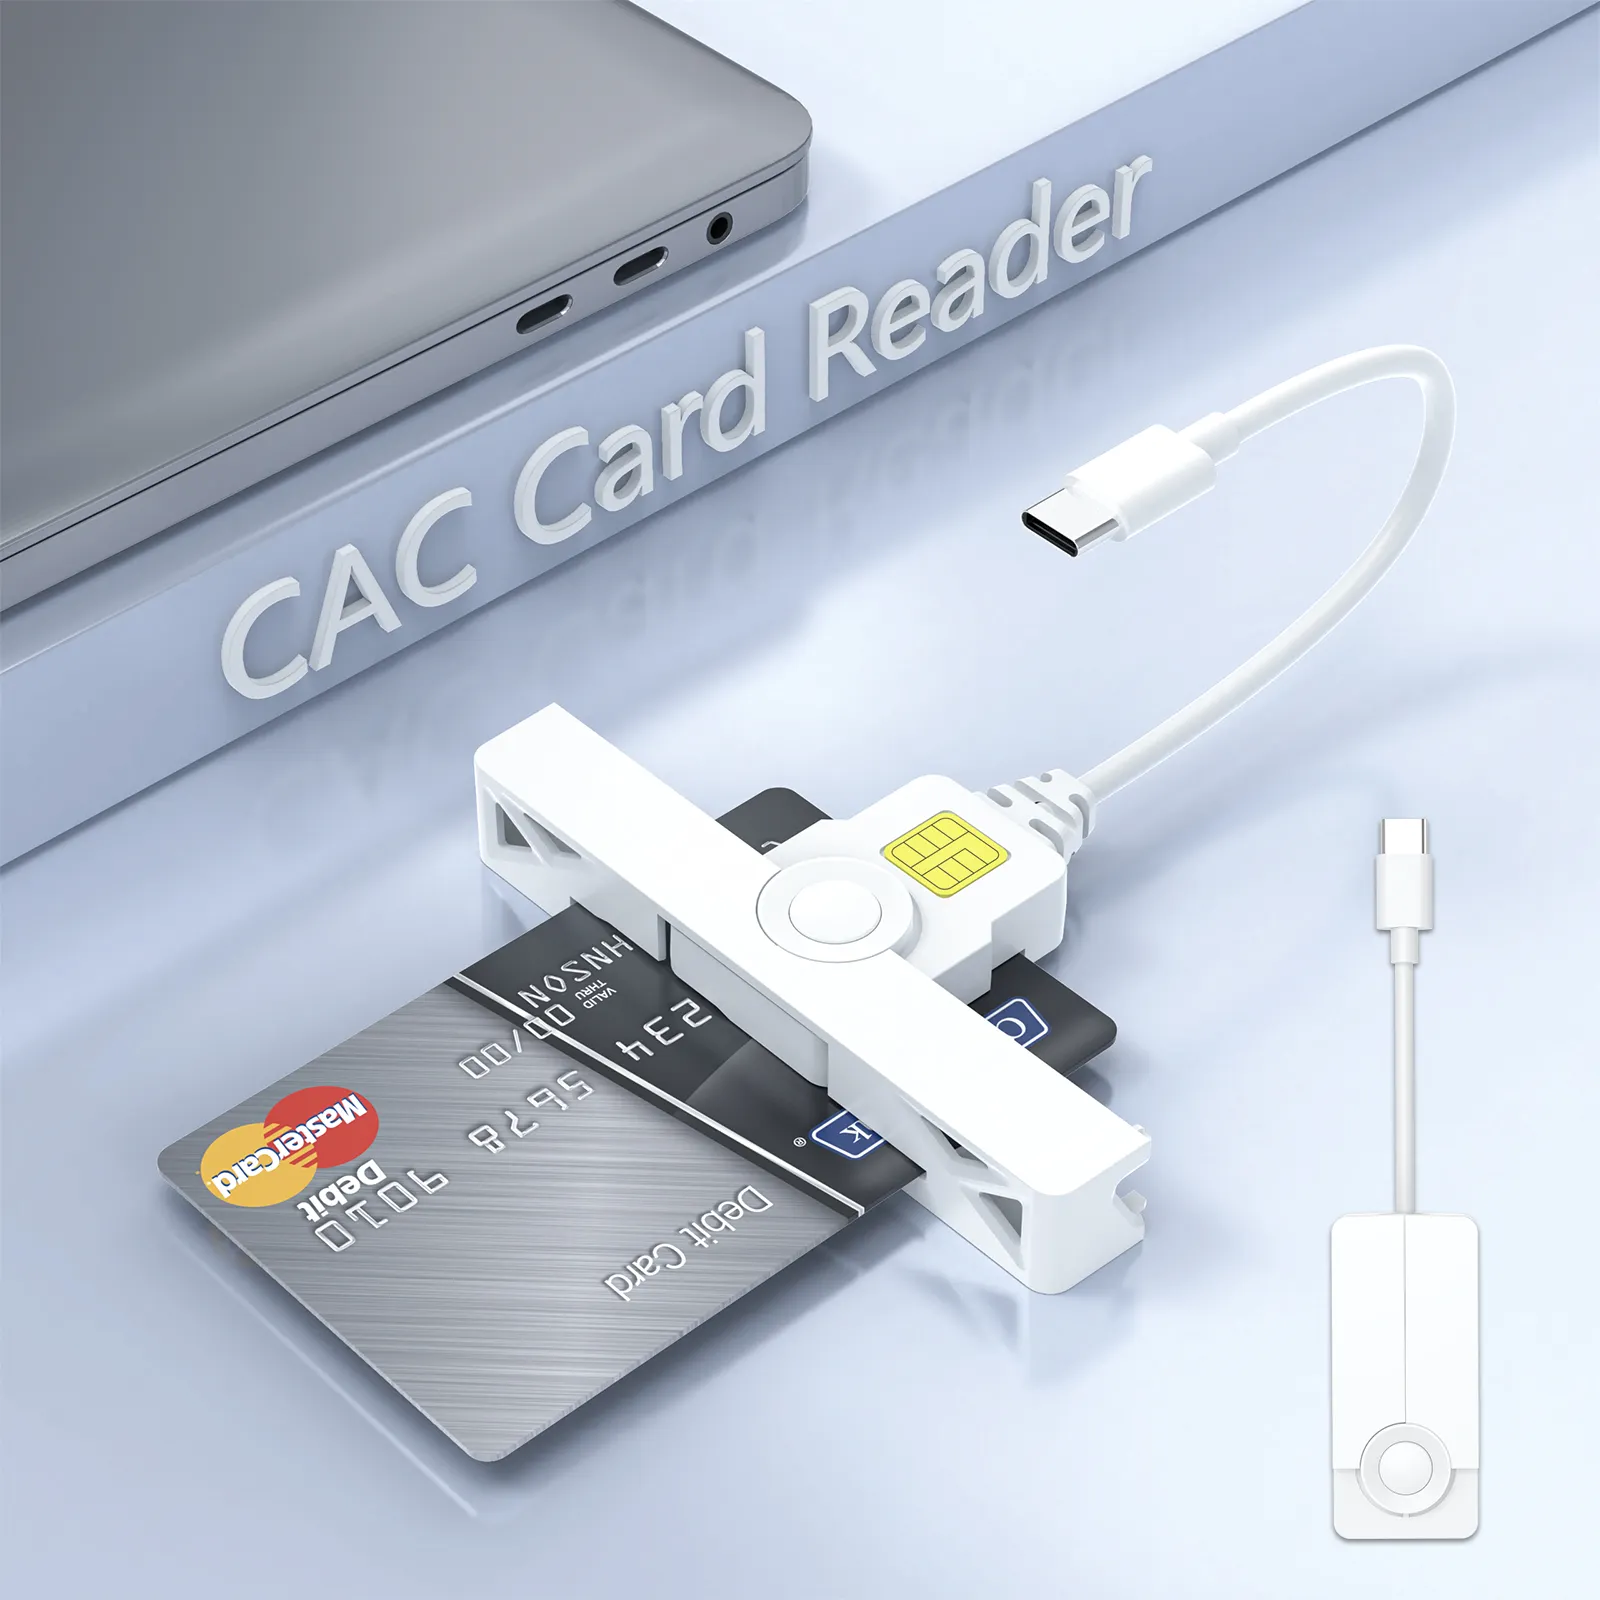 Mini USB C Smart Card Reader Writer CAC DOD Credit Card EMV ISO7816 Compact Smart Card Reader